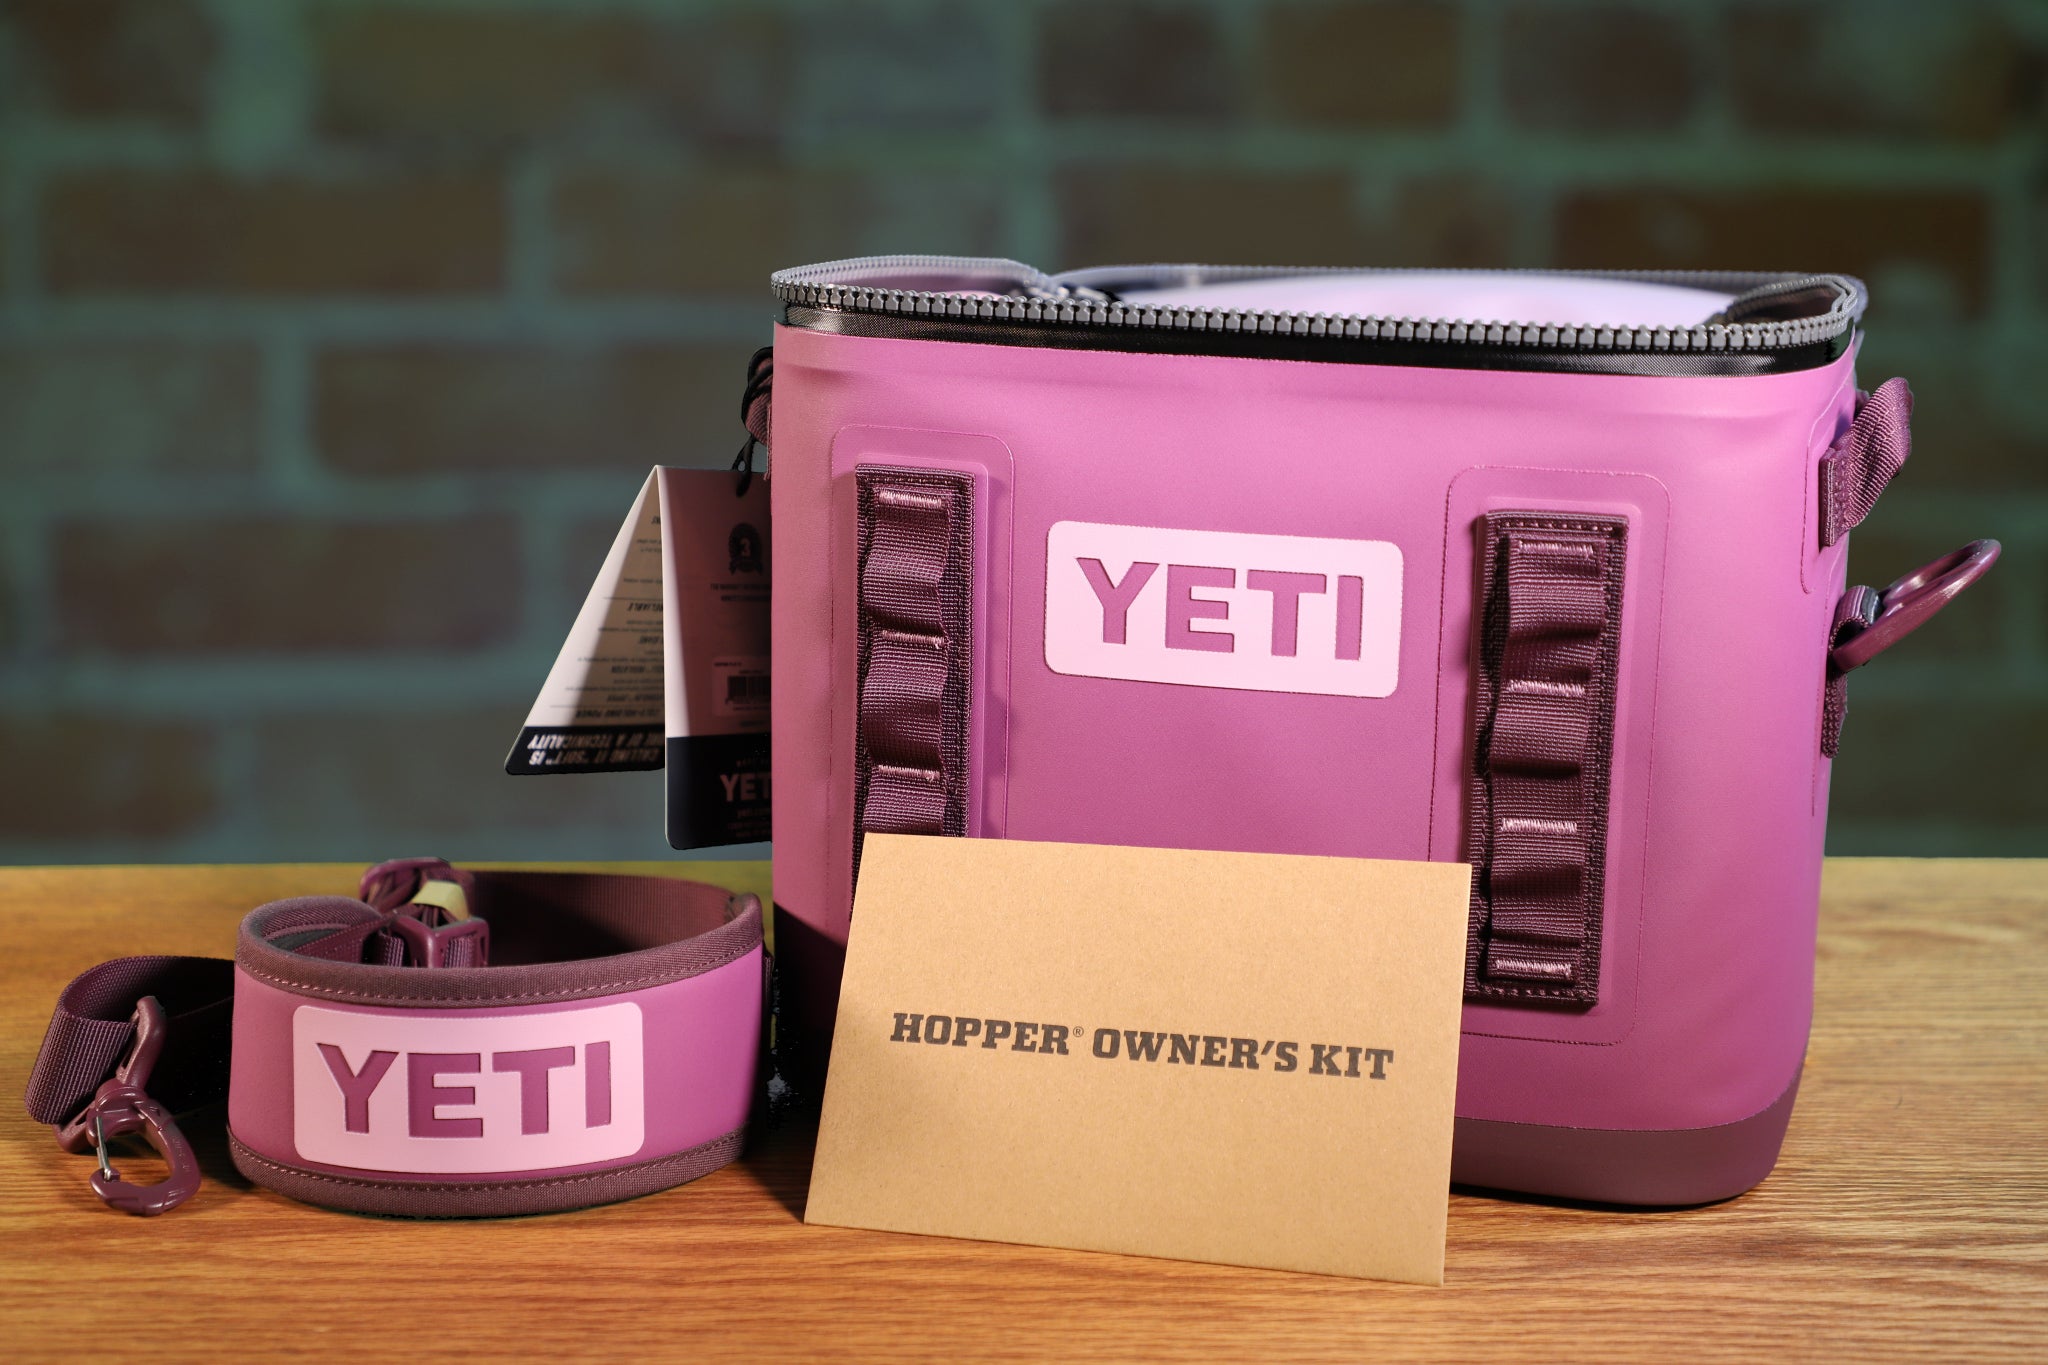 YETI Hopper Flip 12 Cooler with Top Handle